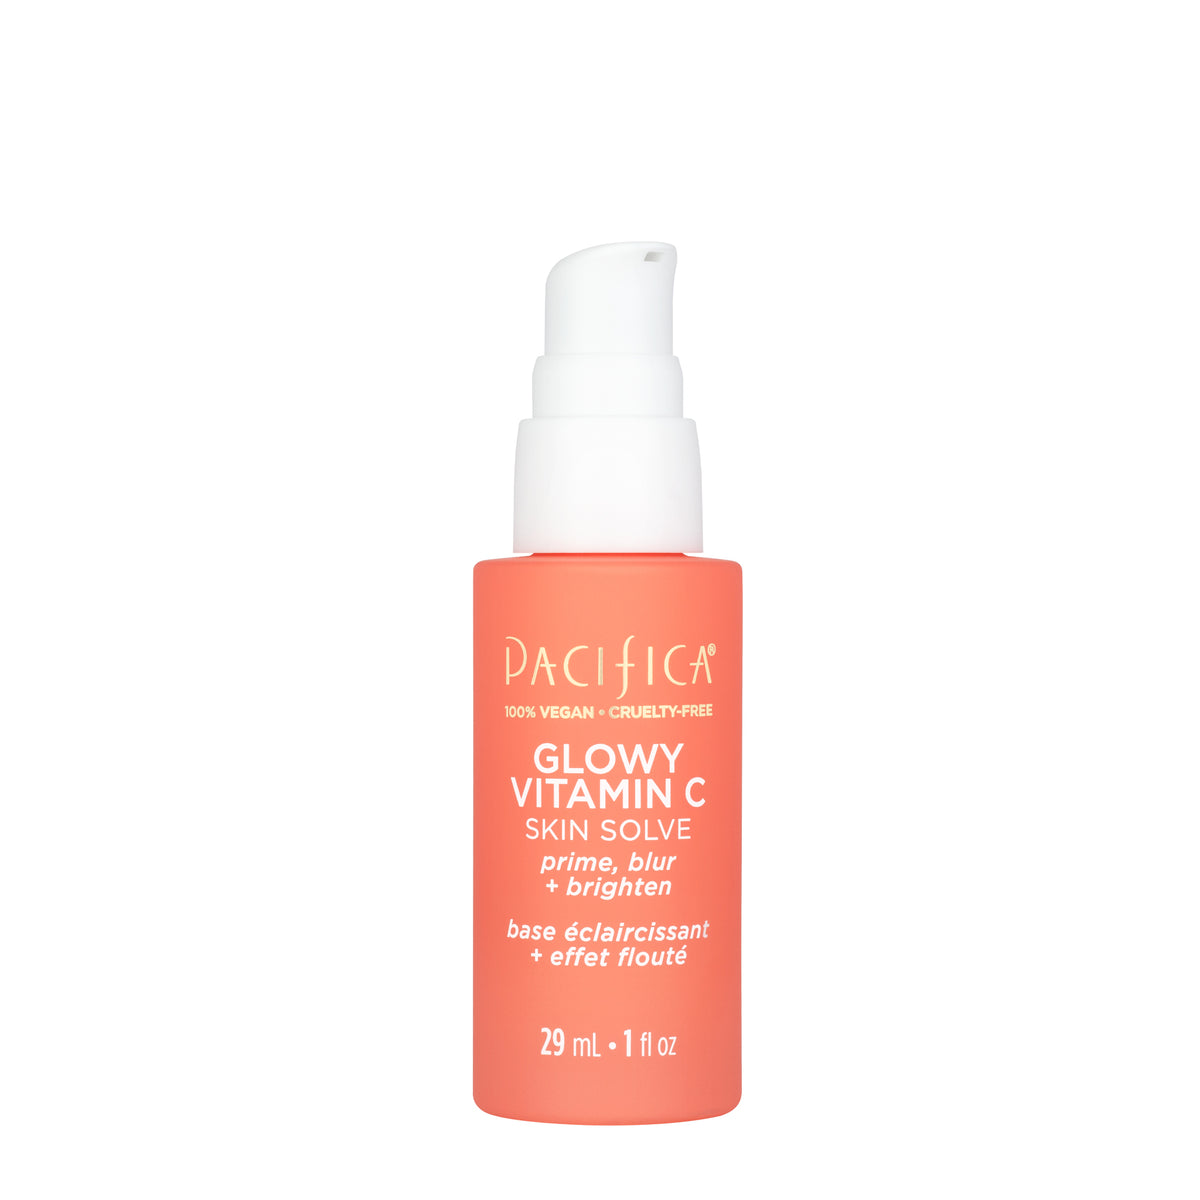 Glowy Vitamin C Skin Solve - Makeup - Pacifica Beauty